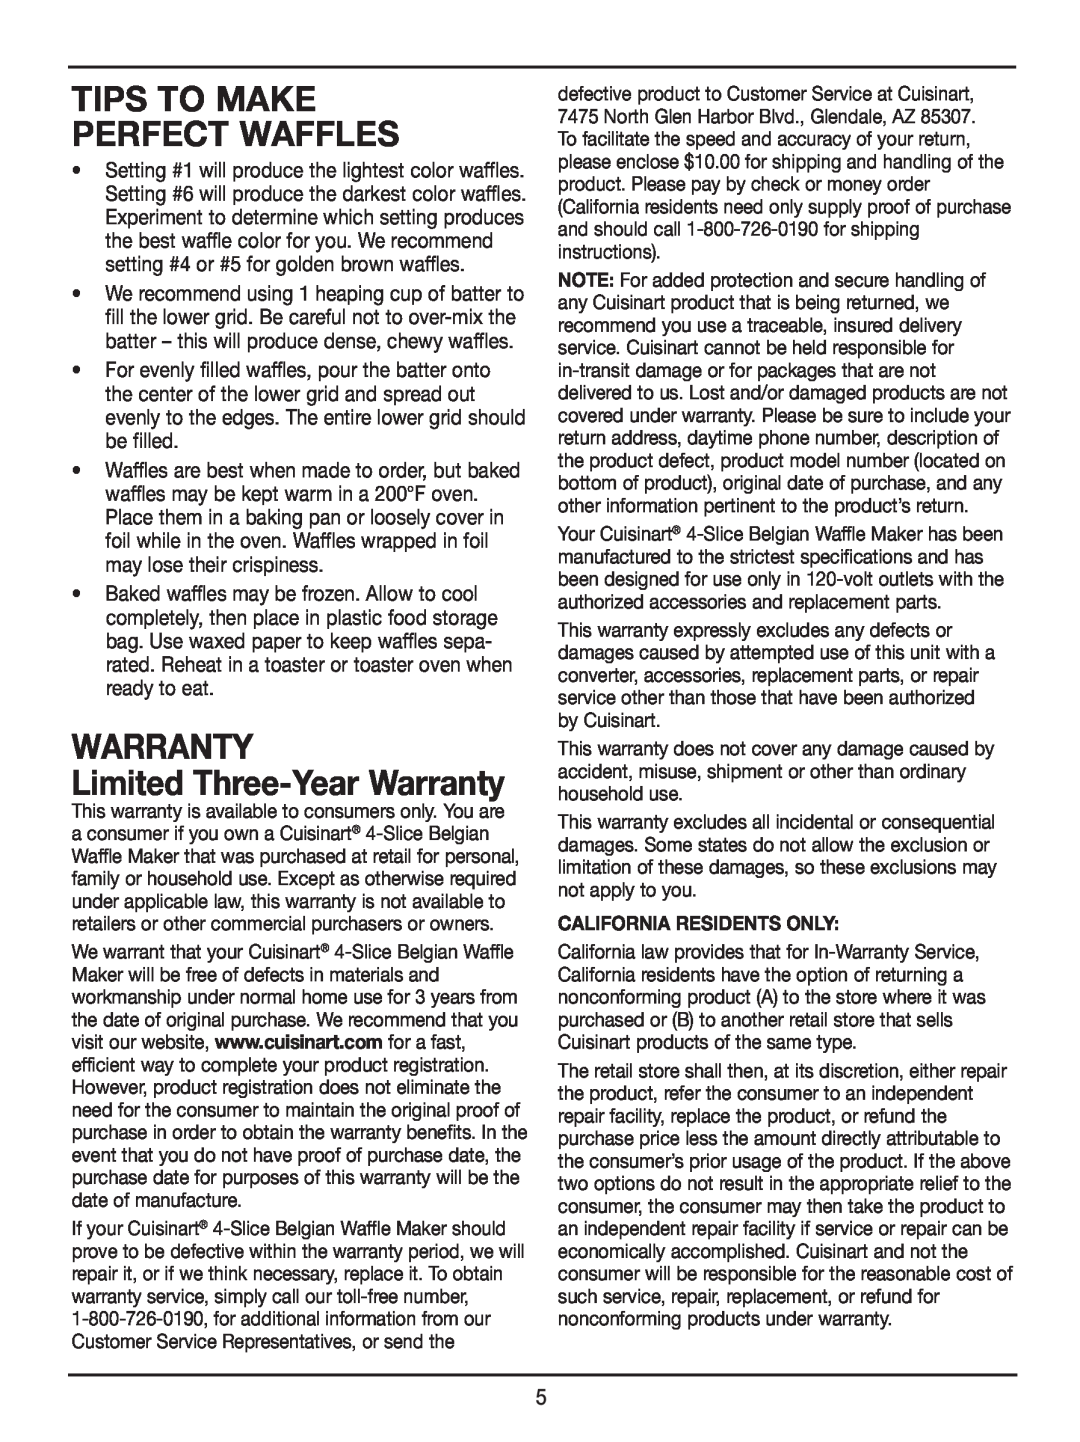 Cuisinart WAF-2OO manual Tips To Make Perfect Waffles, Limited Three-YearWarranty 